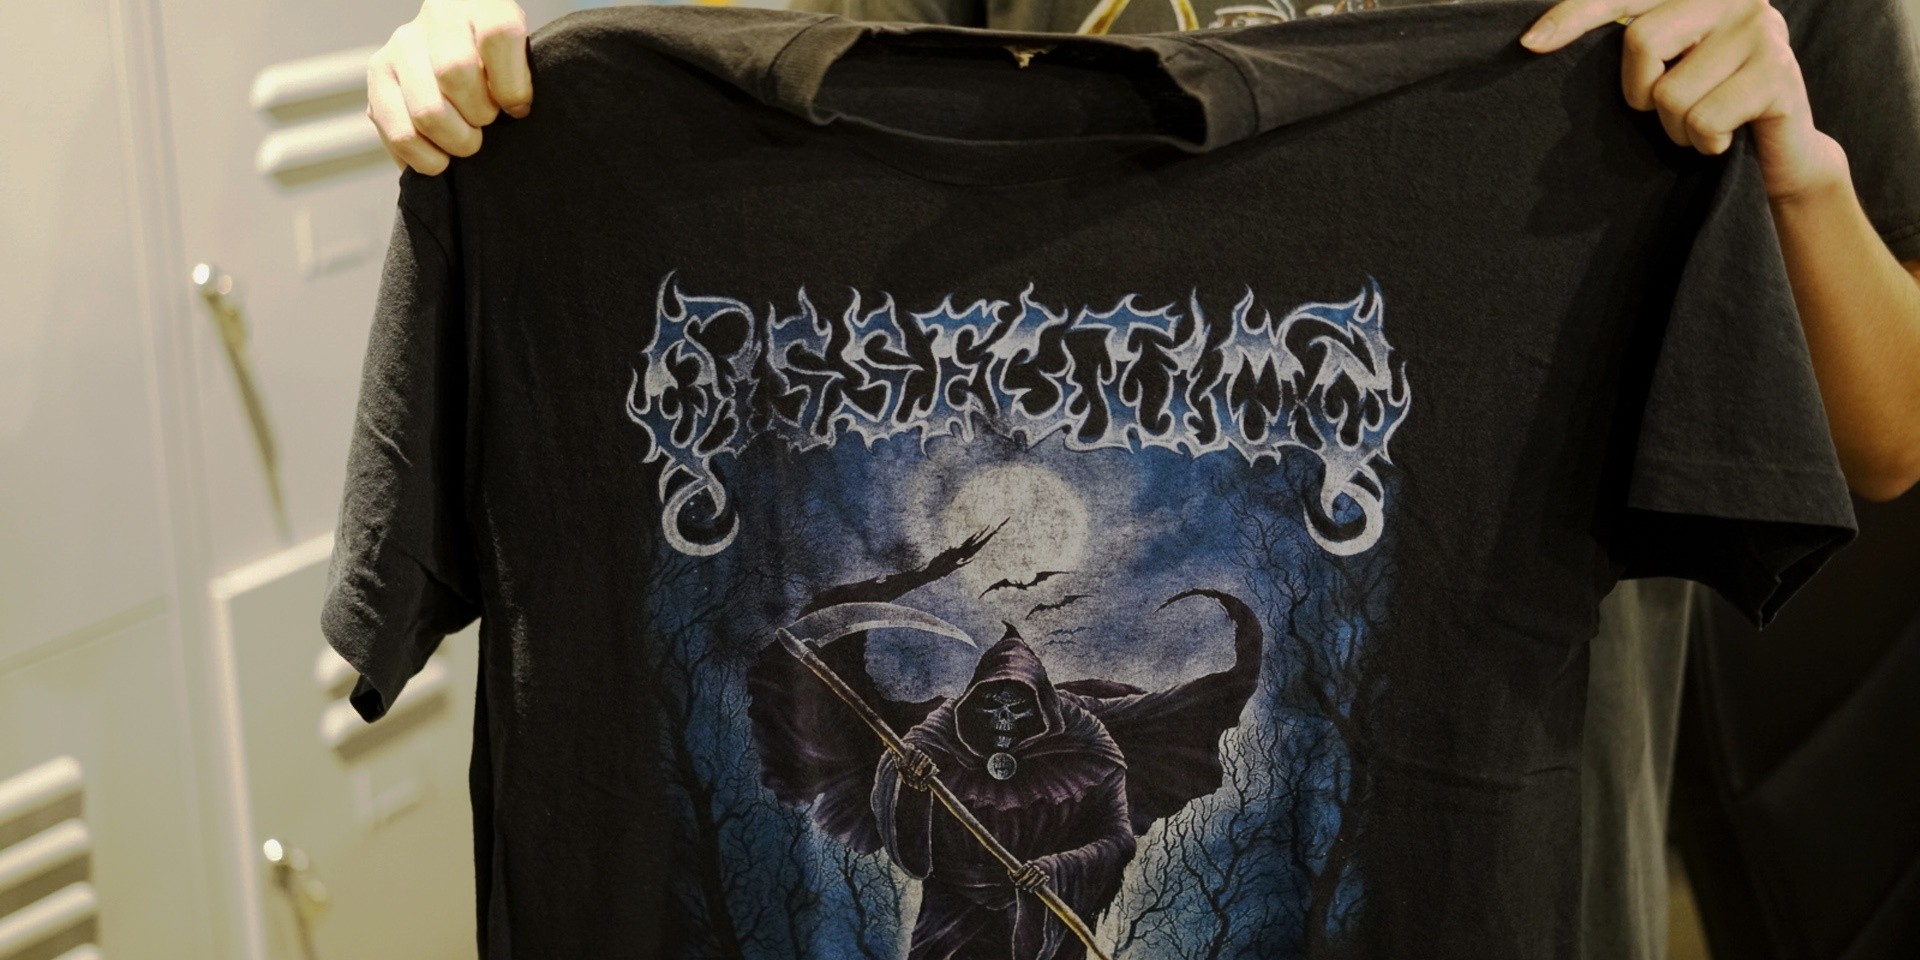 metalhead nurtures his of vintage metal t-shirts